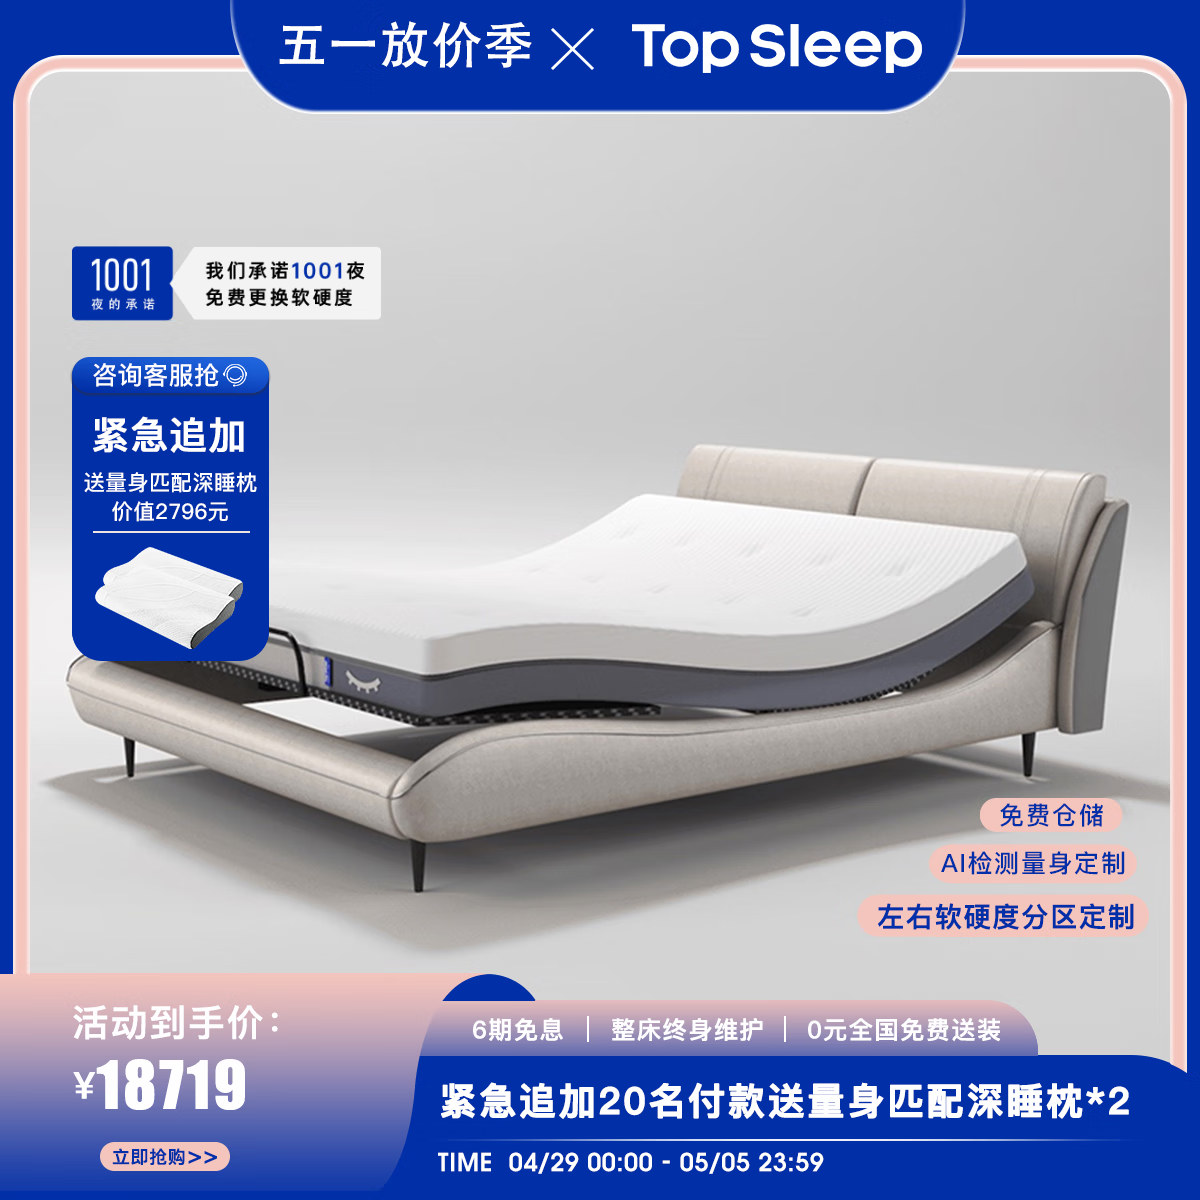 TOP SLEEP瑜伽智能床现代多功能零压电动可升降多功能床按摩床1.8米双人床 不含床包围 智能系统+床垫